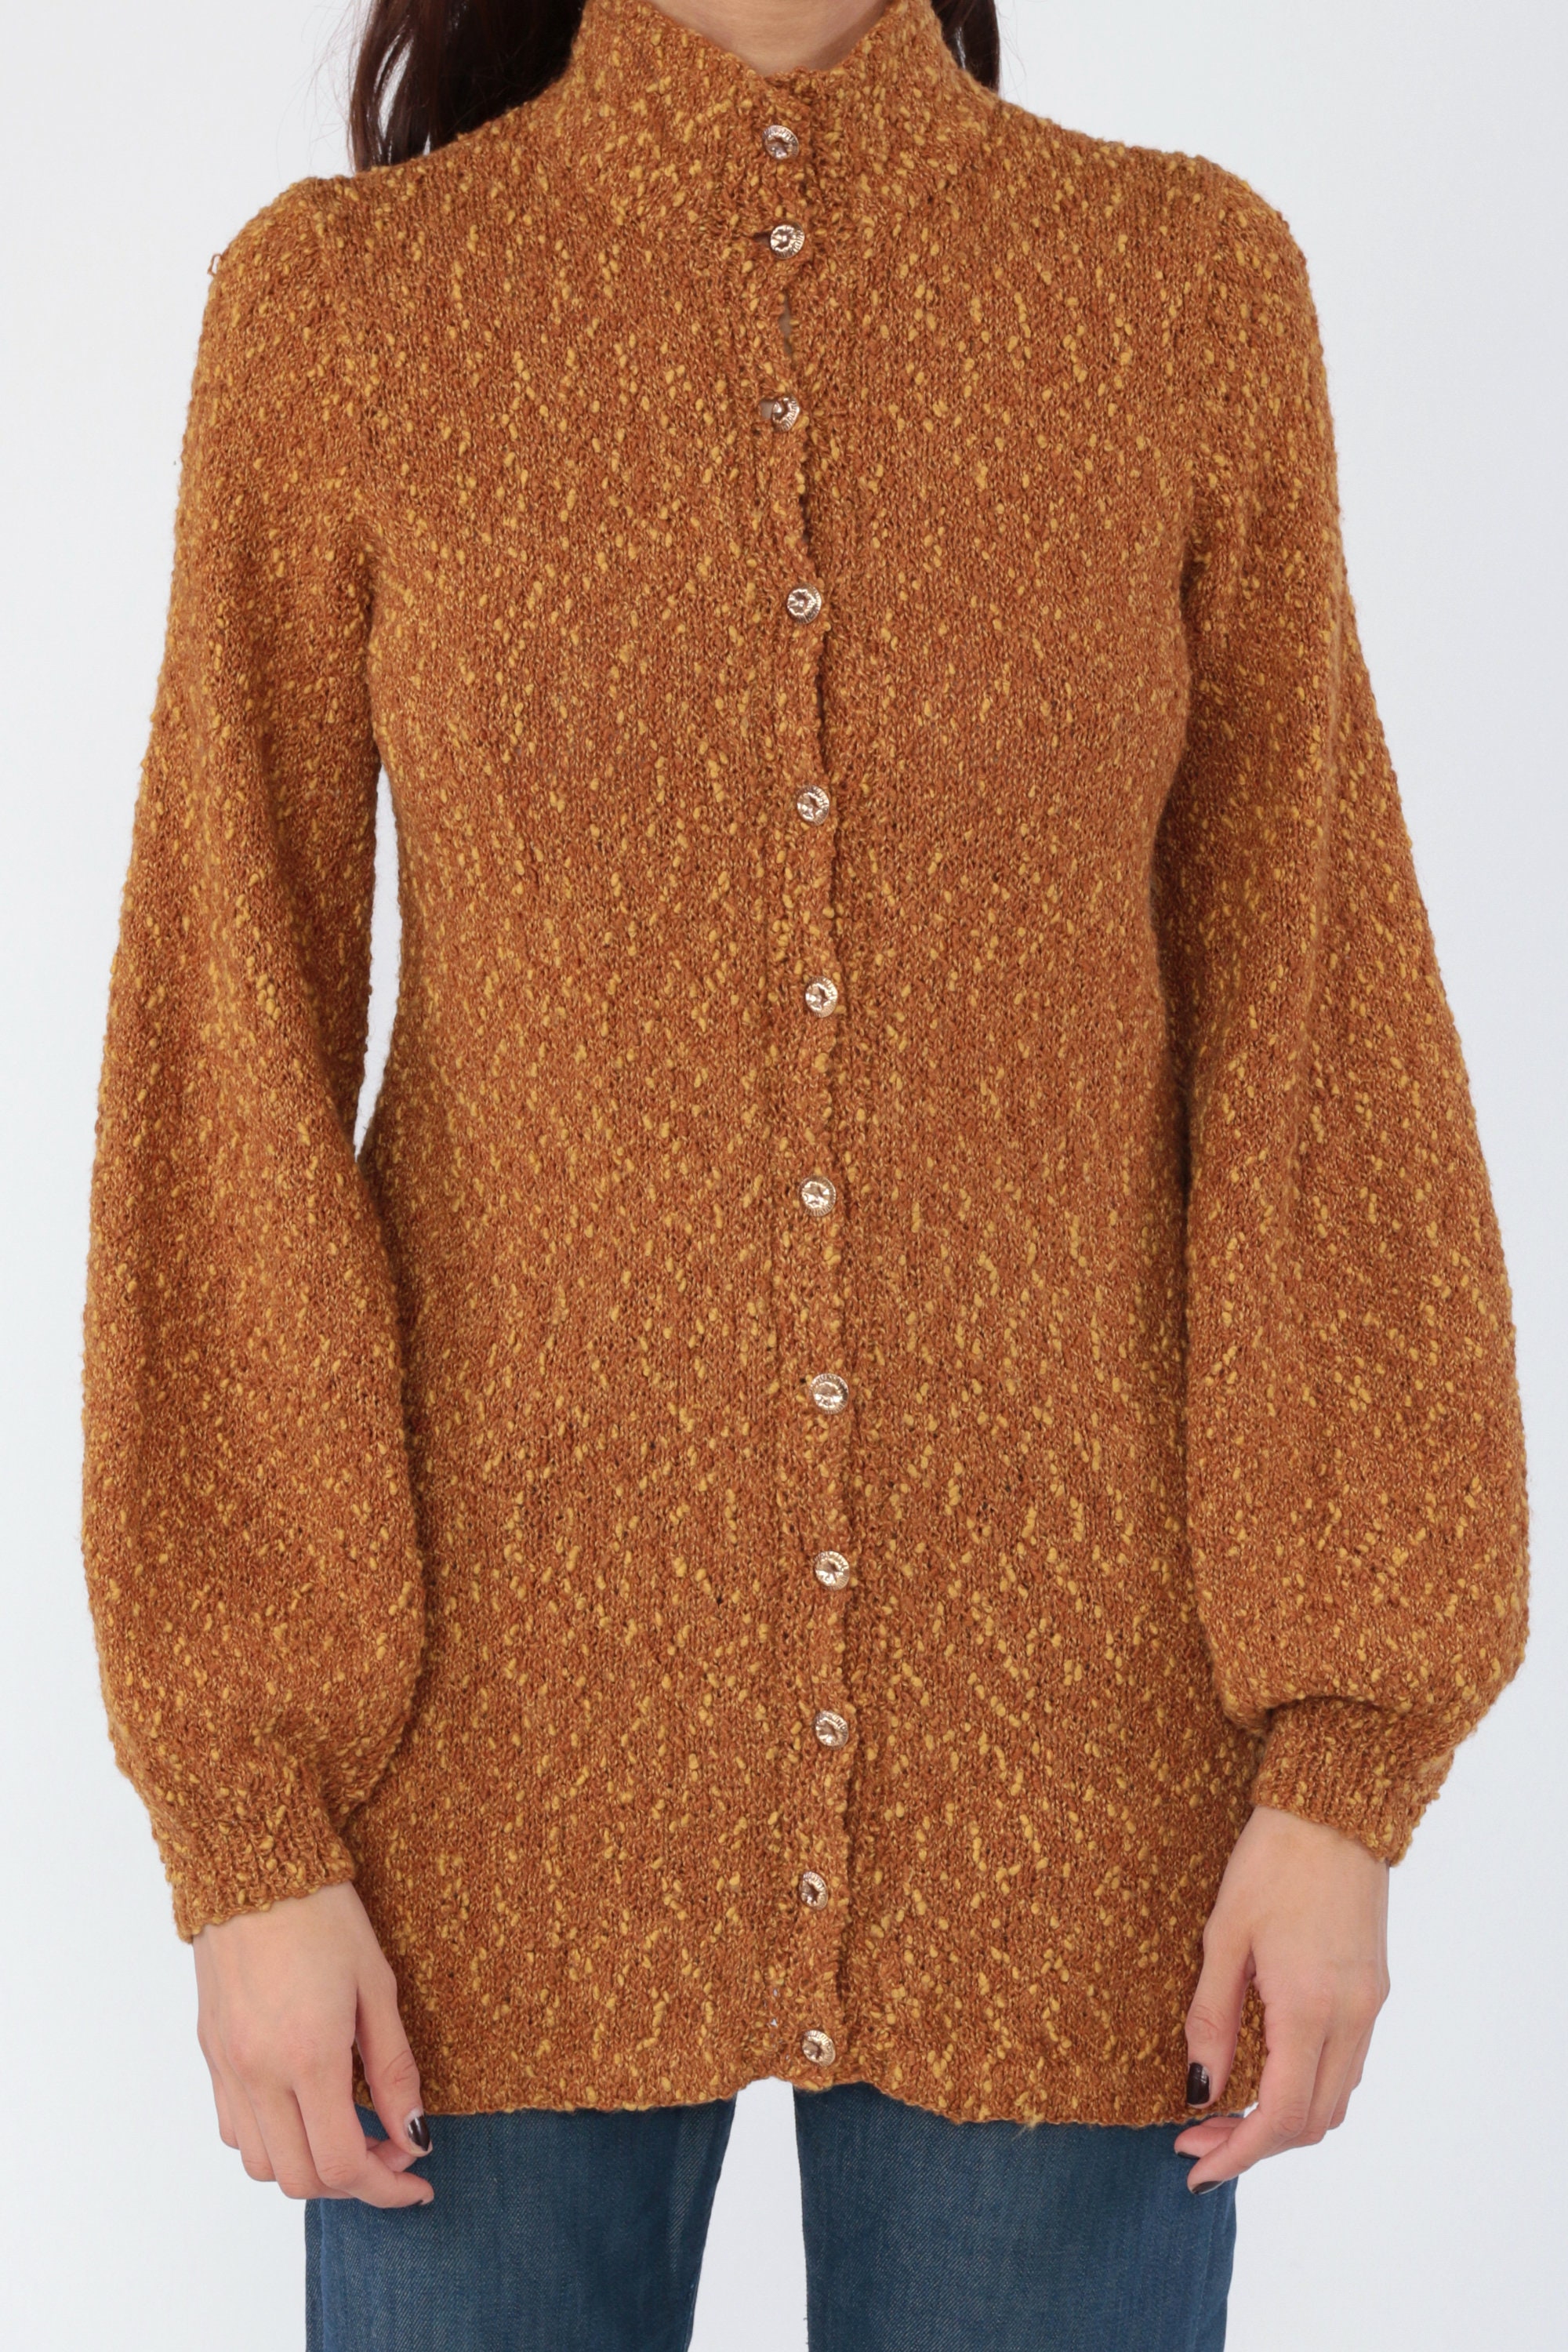 Bohemian Cardigan Sweater 70s BALLOON SLEEVE Sweater Brown 80s Vintage